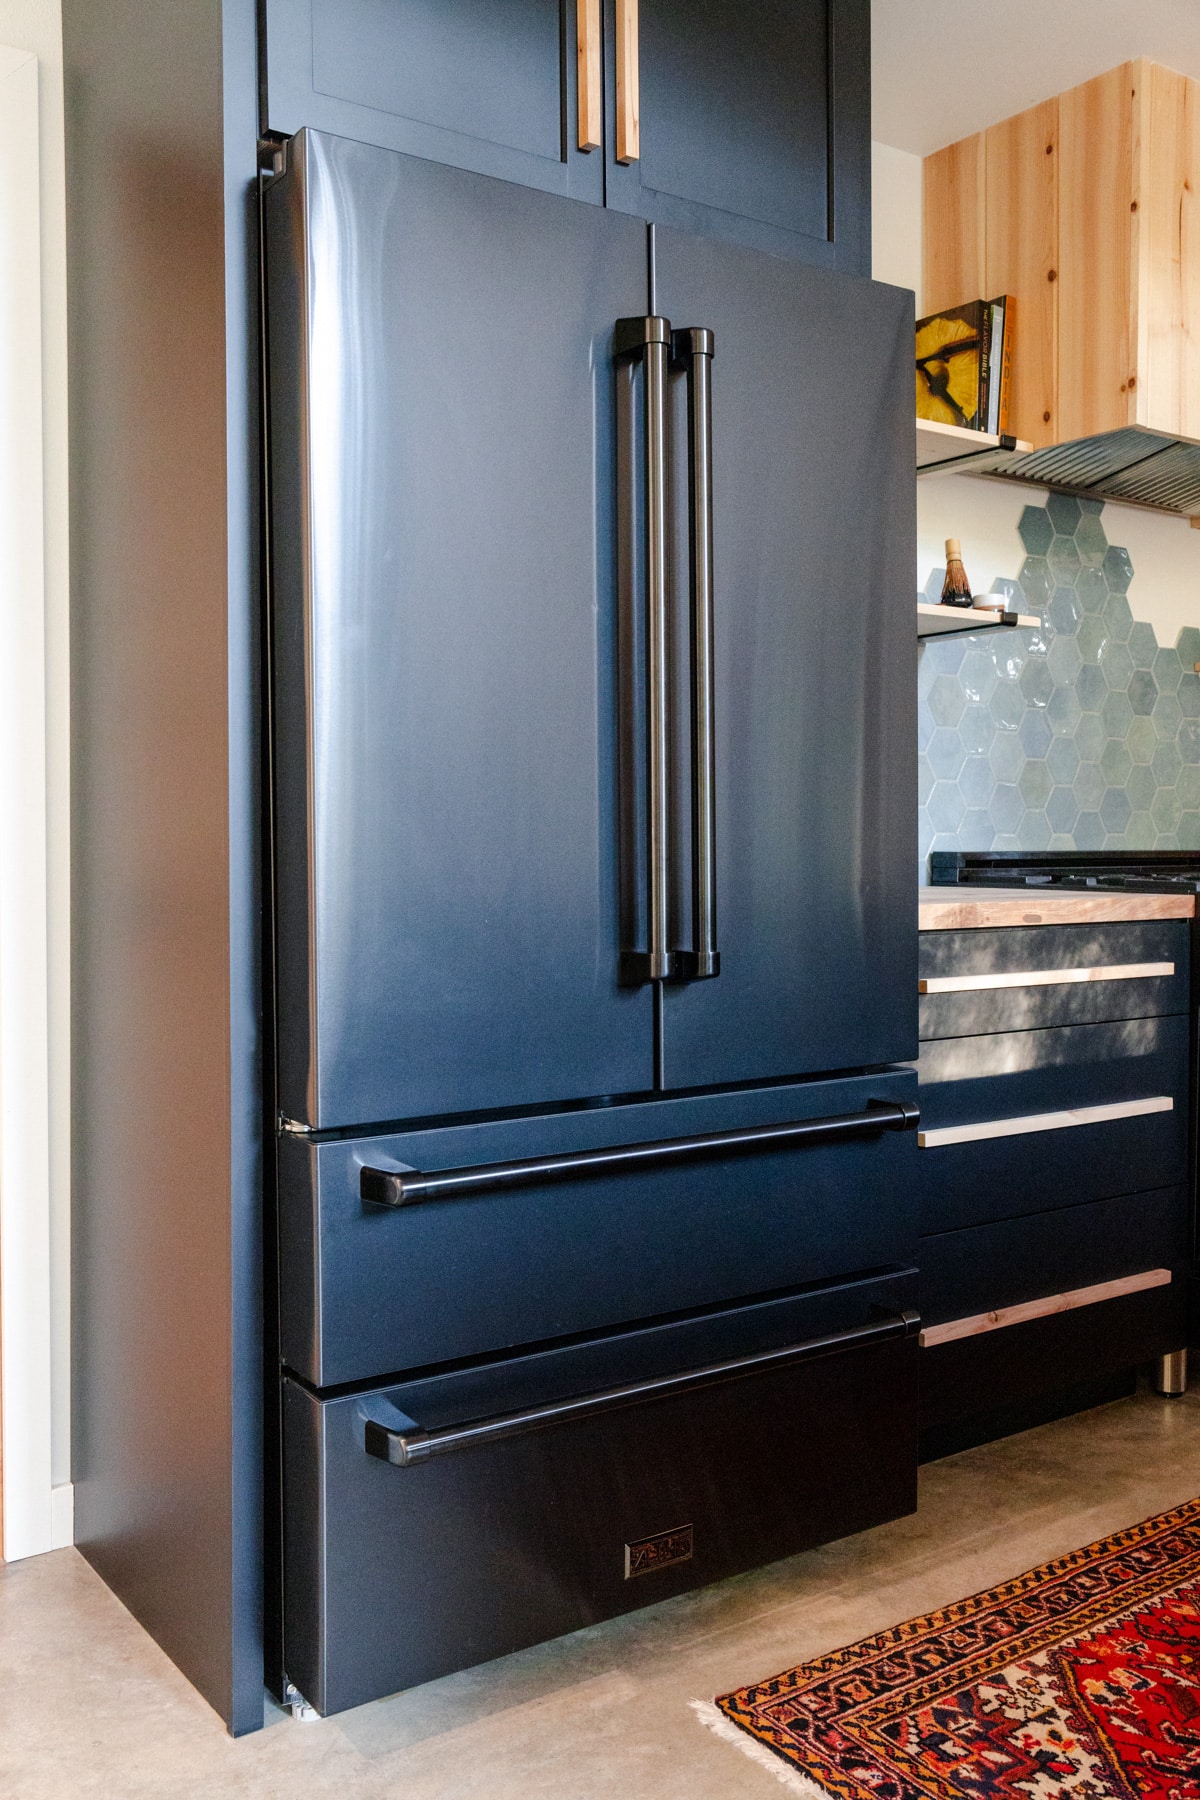 Counter-depth black stainless steel refrigerator from ZLINE appliances.